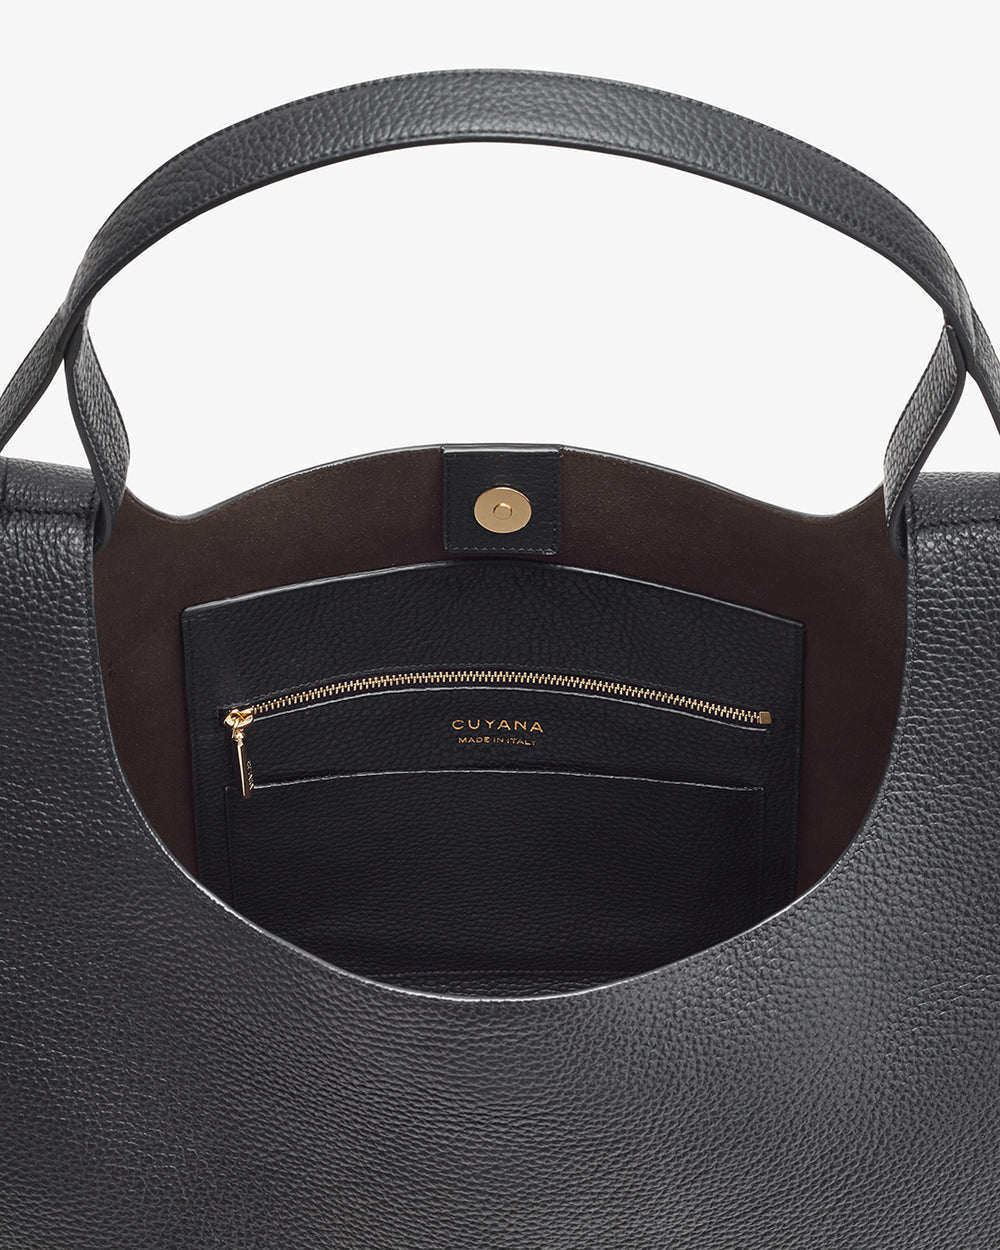 Open handbag showing interior and zipper pocket.